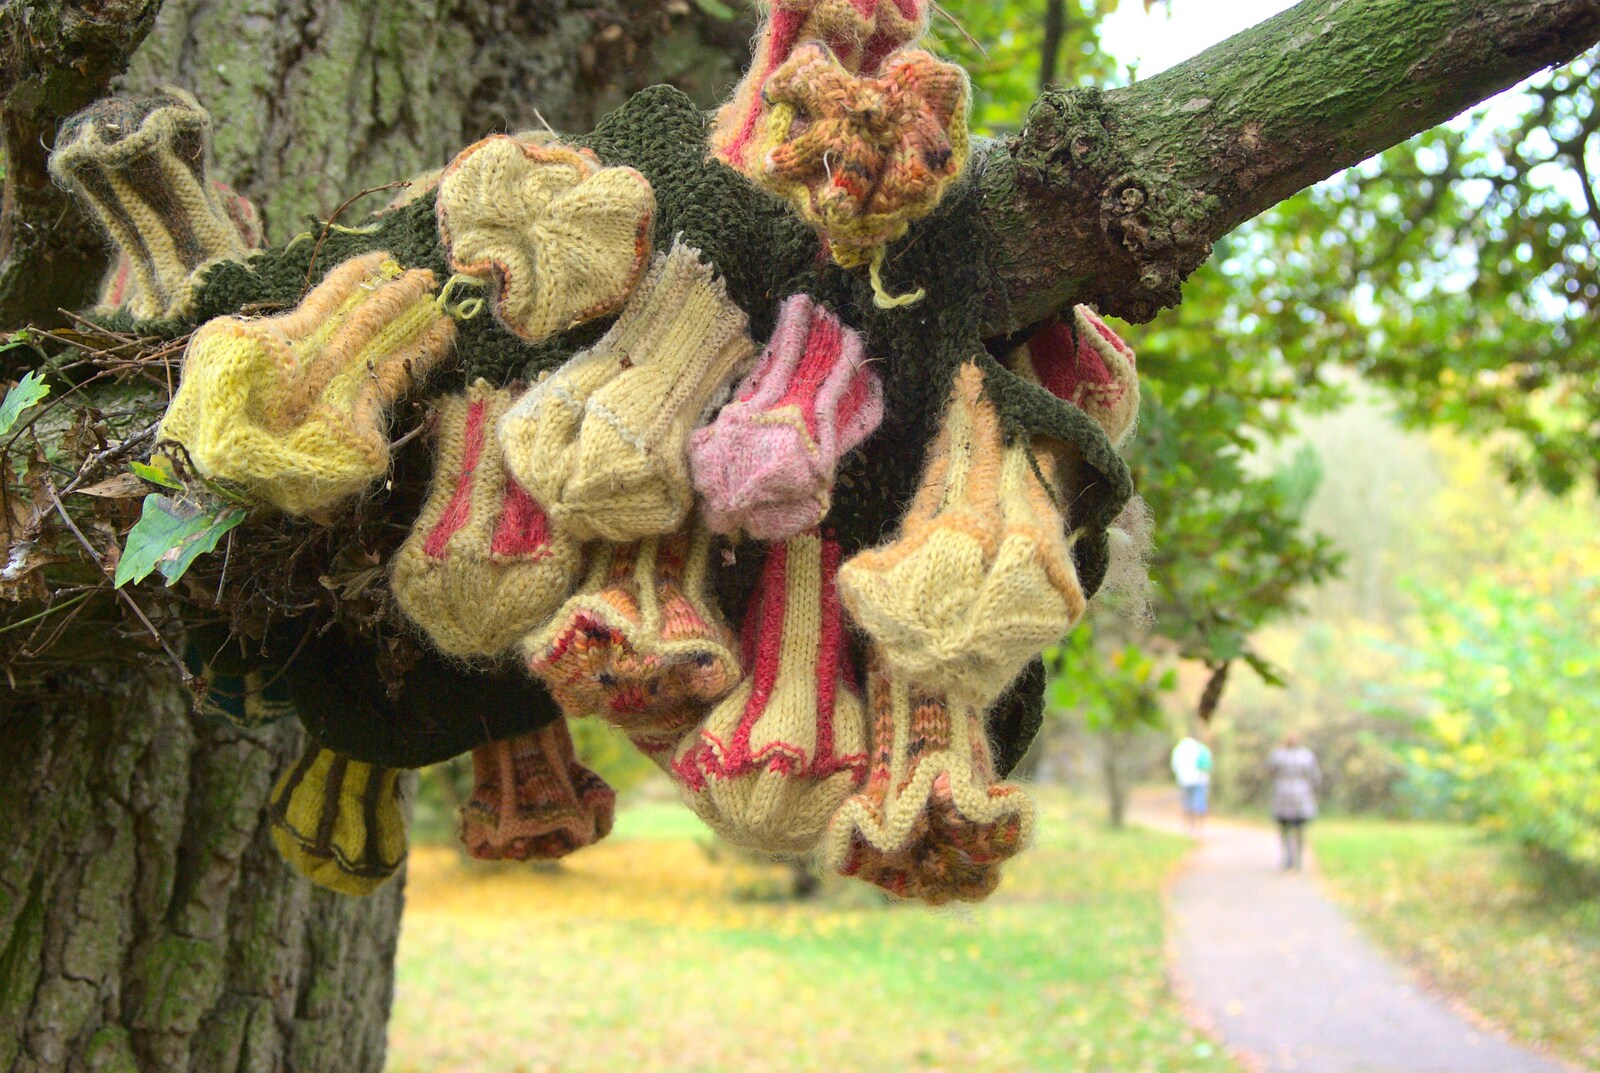 Knitted mushrooms in a tree from Autumn in Thornham Estate, Thornham, Suffolk - 6th November 2011